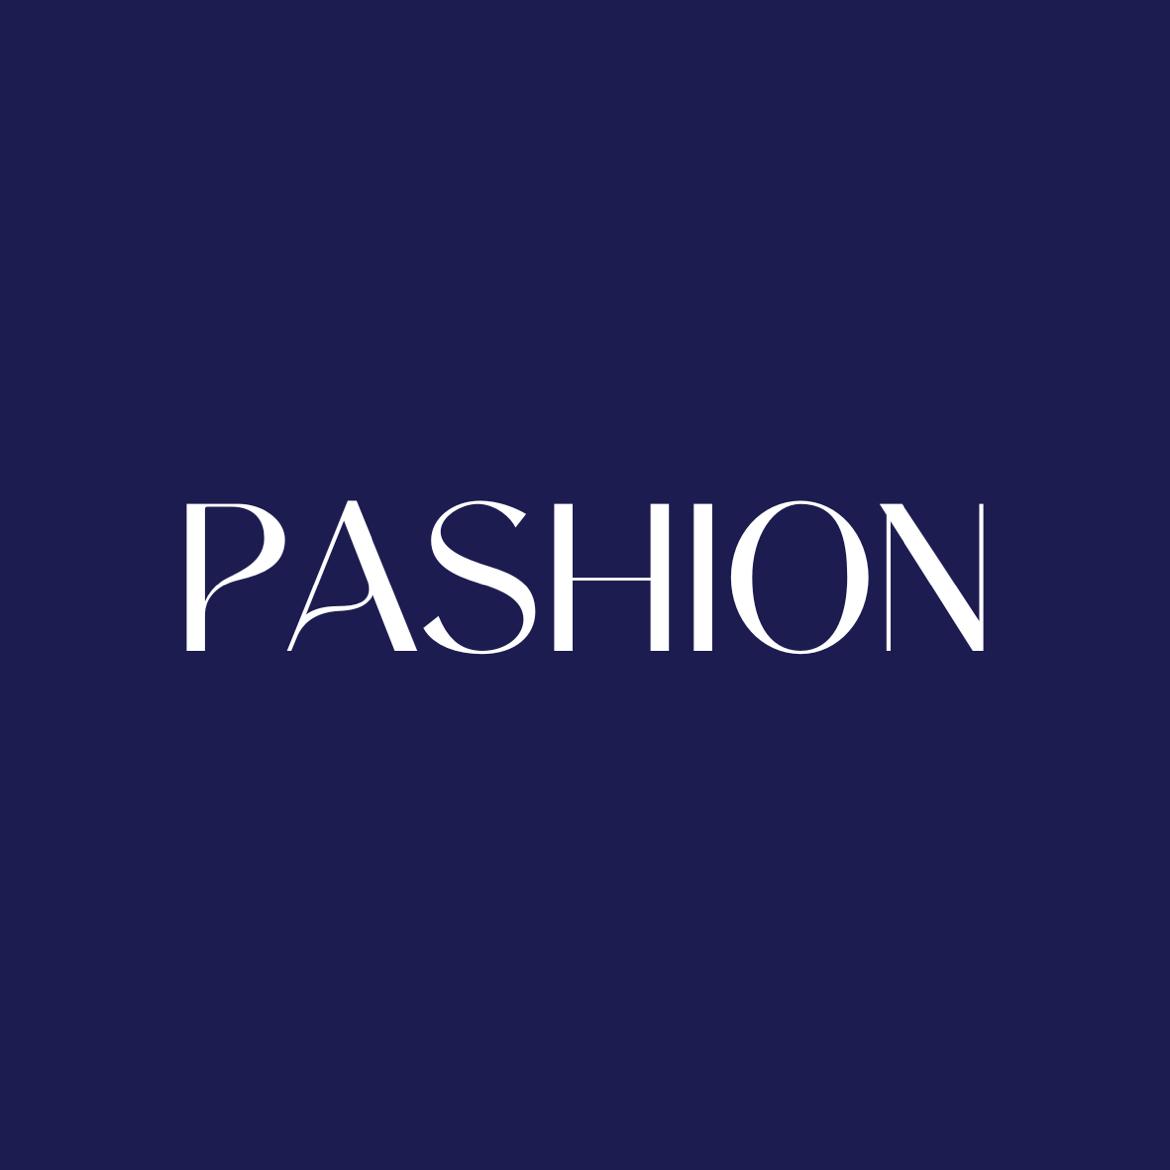 PashionFootwear's images